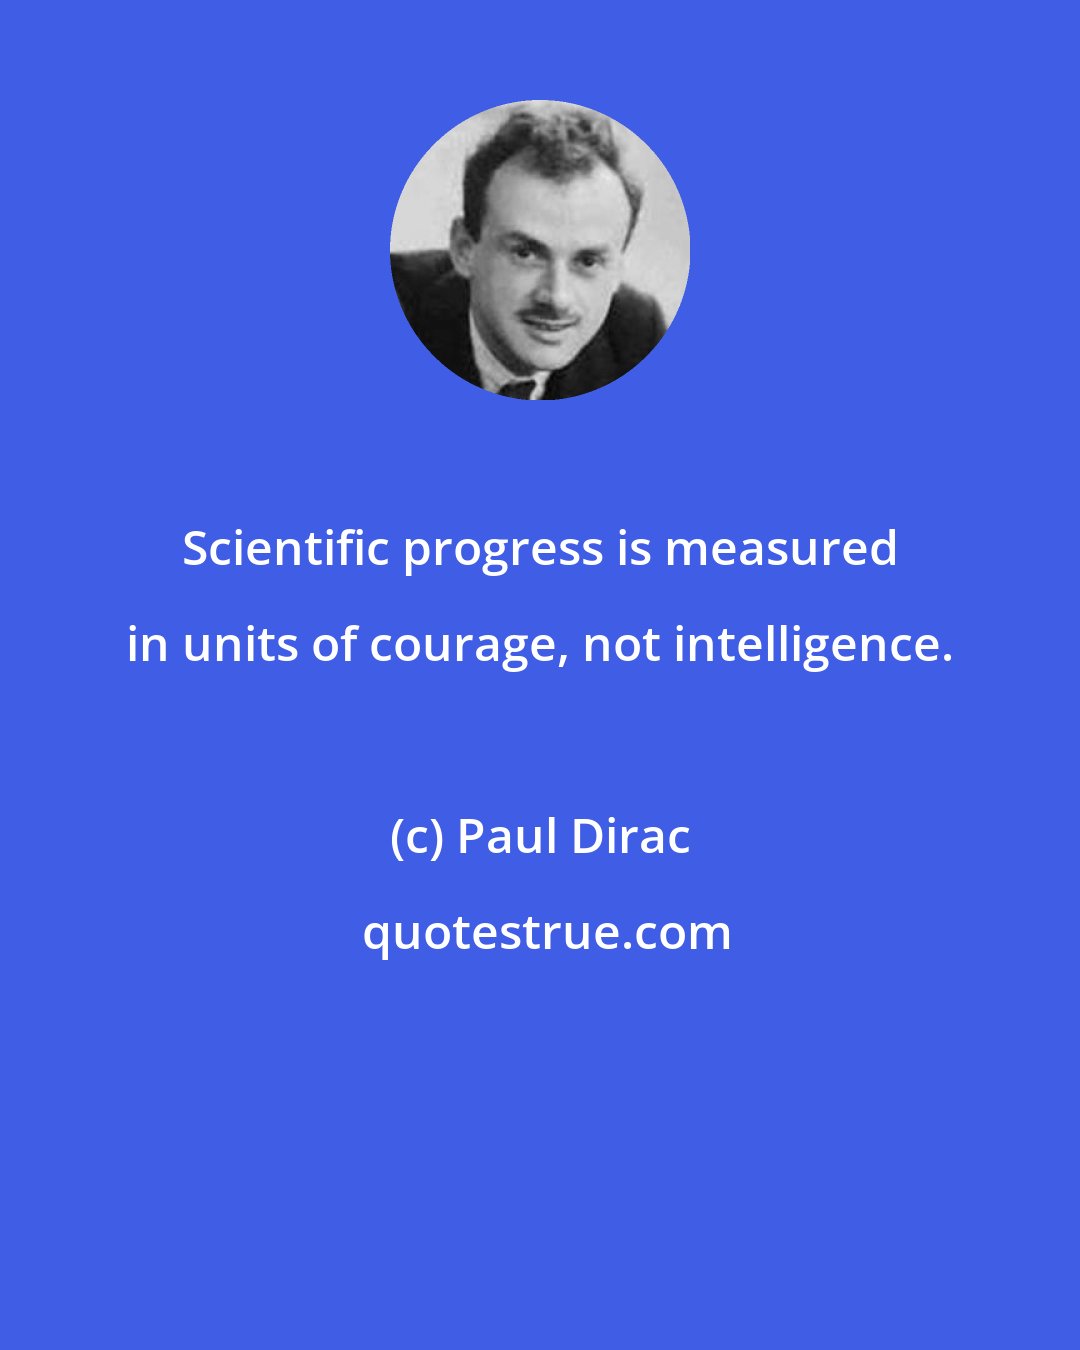 Paul Dirac: Scientific progress is measured in units of courage, not intelligence.